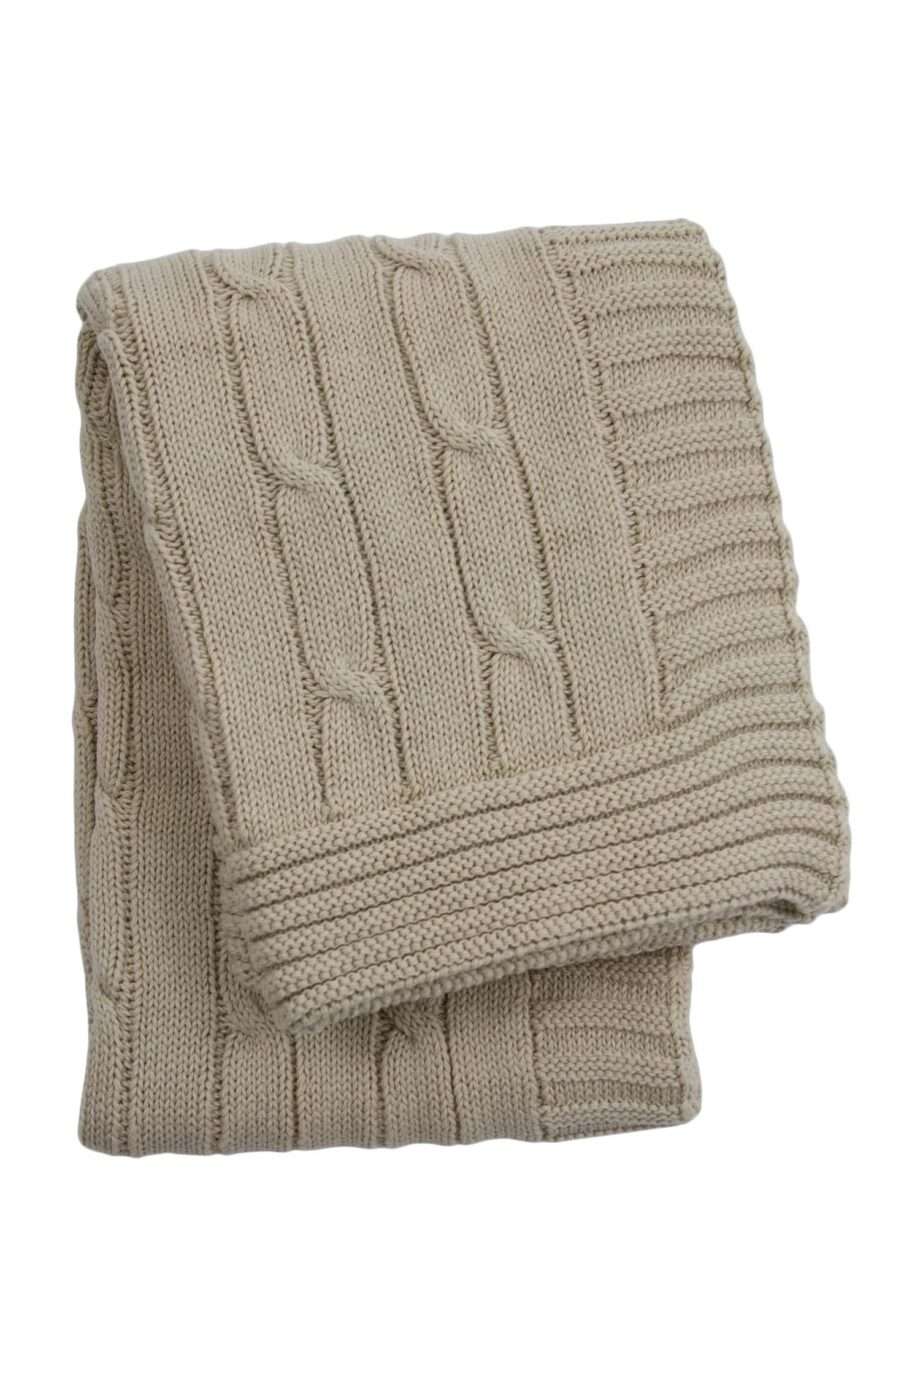 twist linen knitted cotton little blanket small